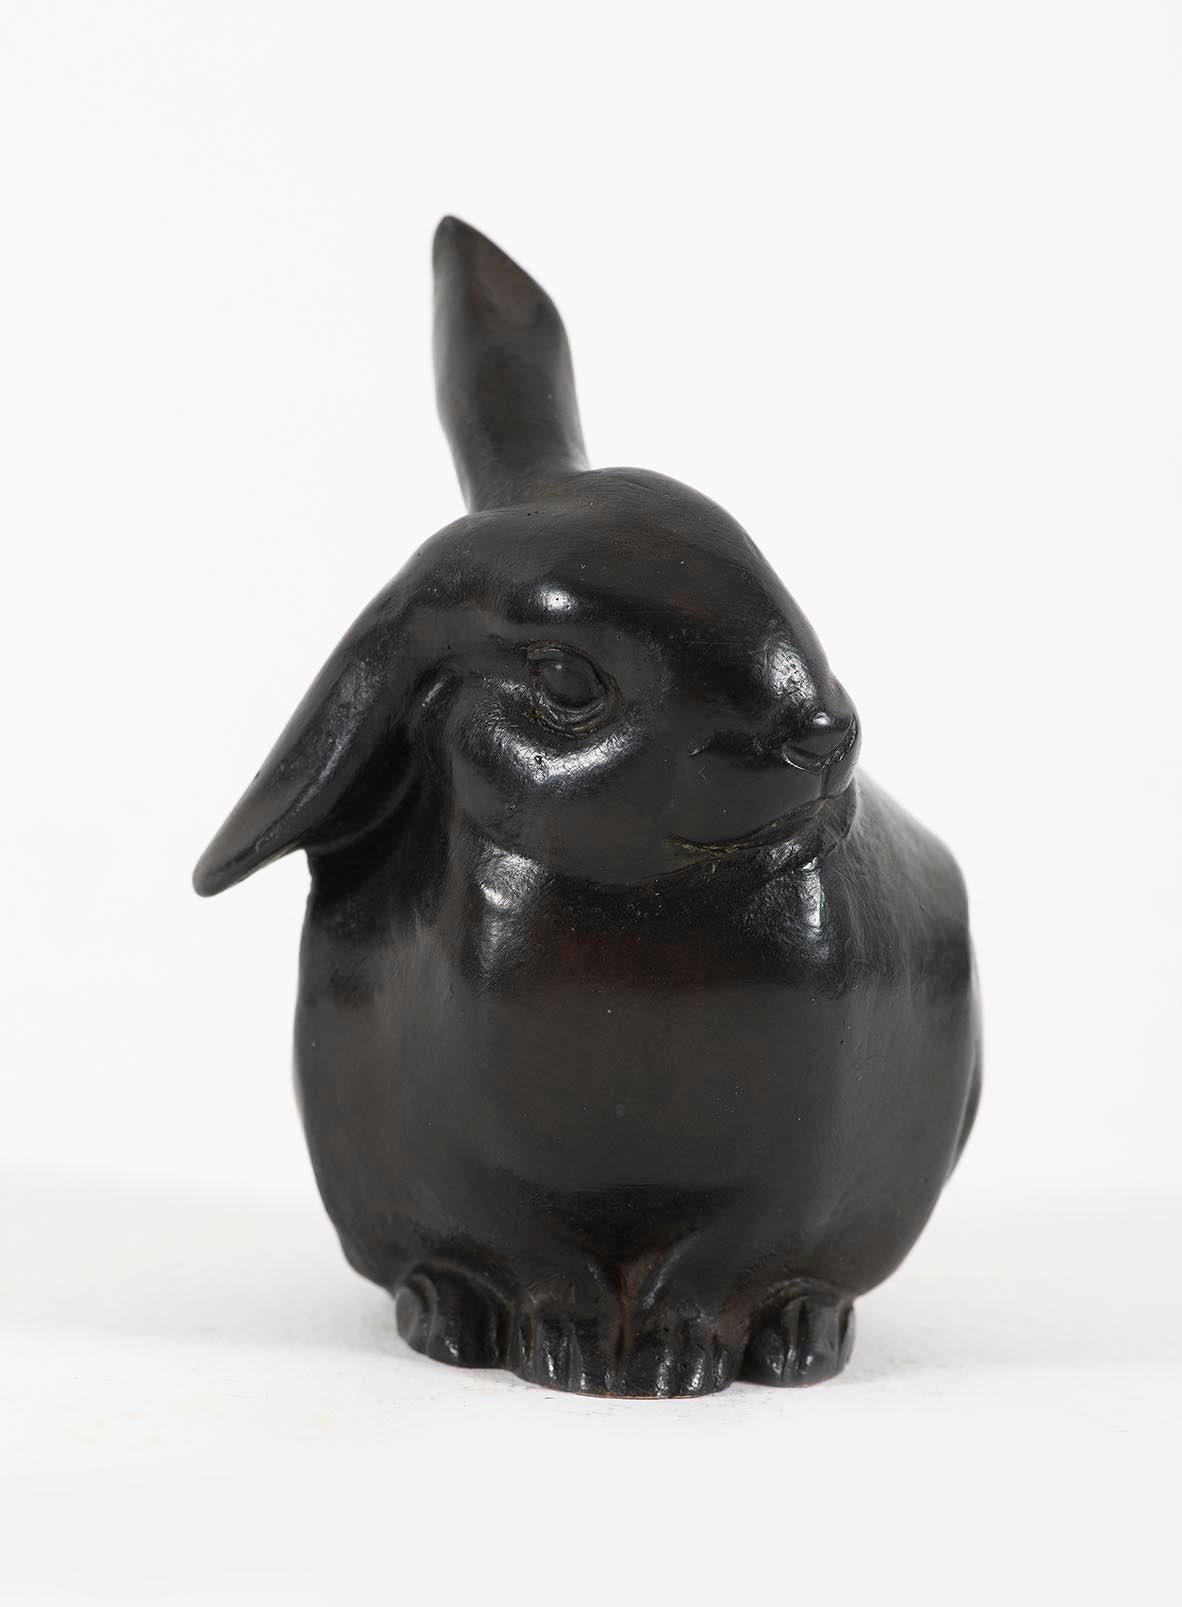 Lapin, by Sandoz, Animal, sculpture, rabbit, bronze, 1940's, brown patina